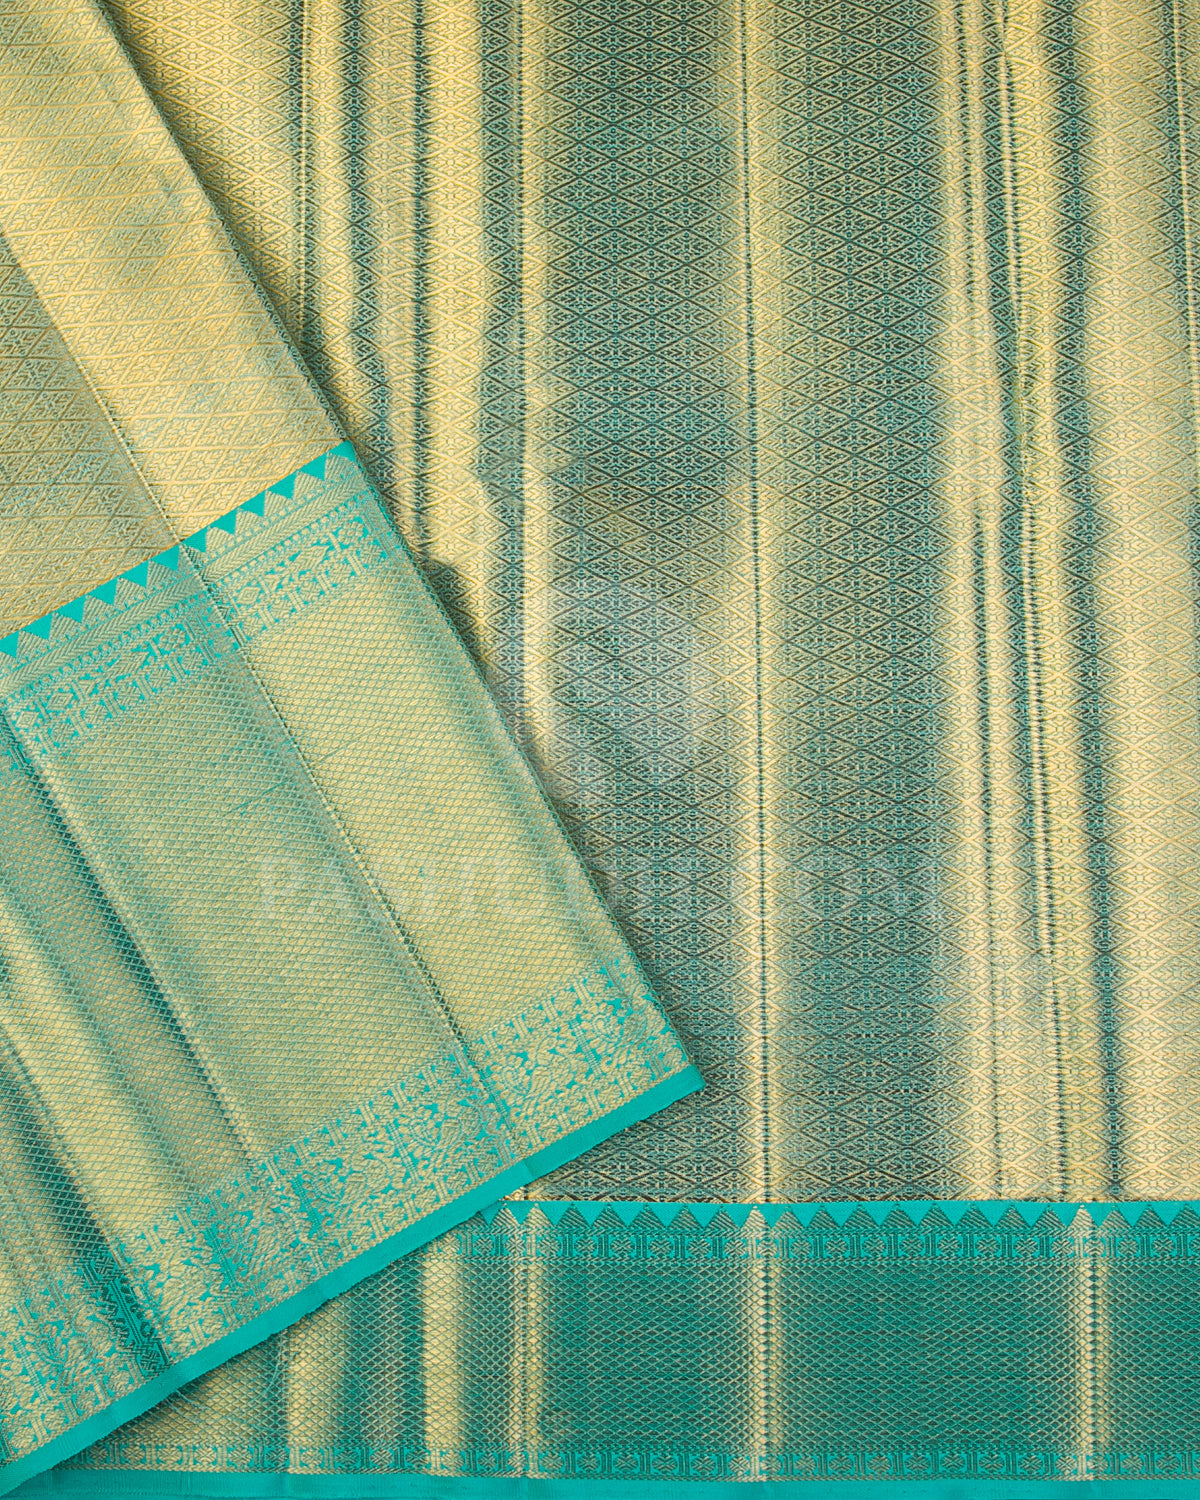 Turquoise Tissue kanjivaram Silk Saree - S1049(C) - View 3